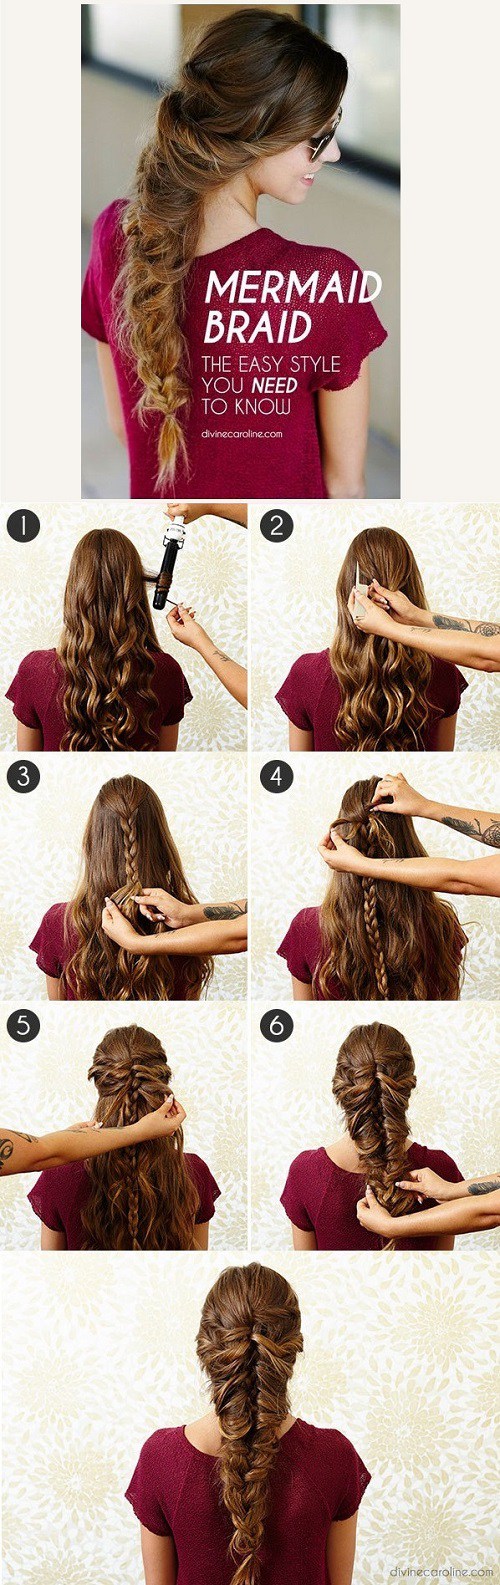 Hair Tutorials for Long Hair and Medium Length Hair